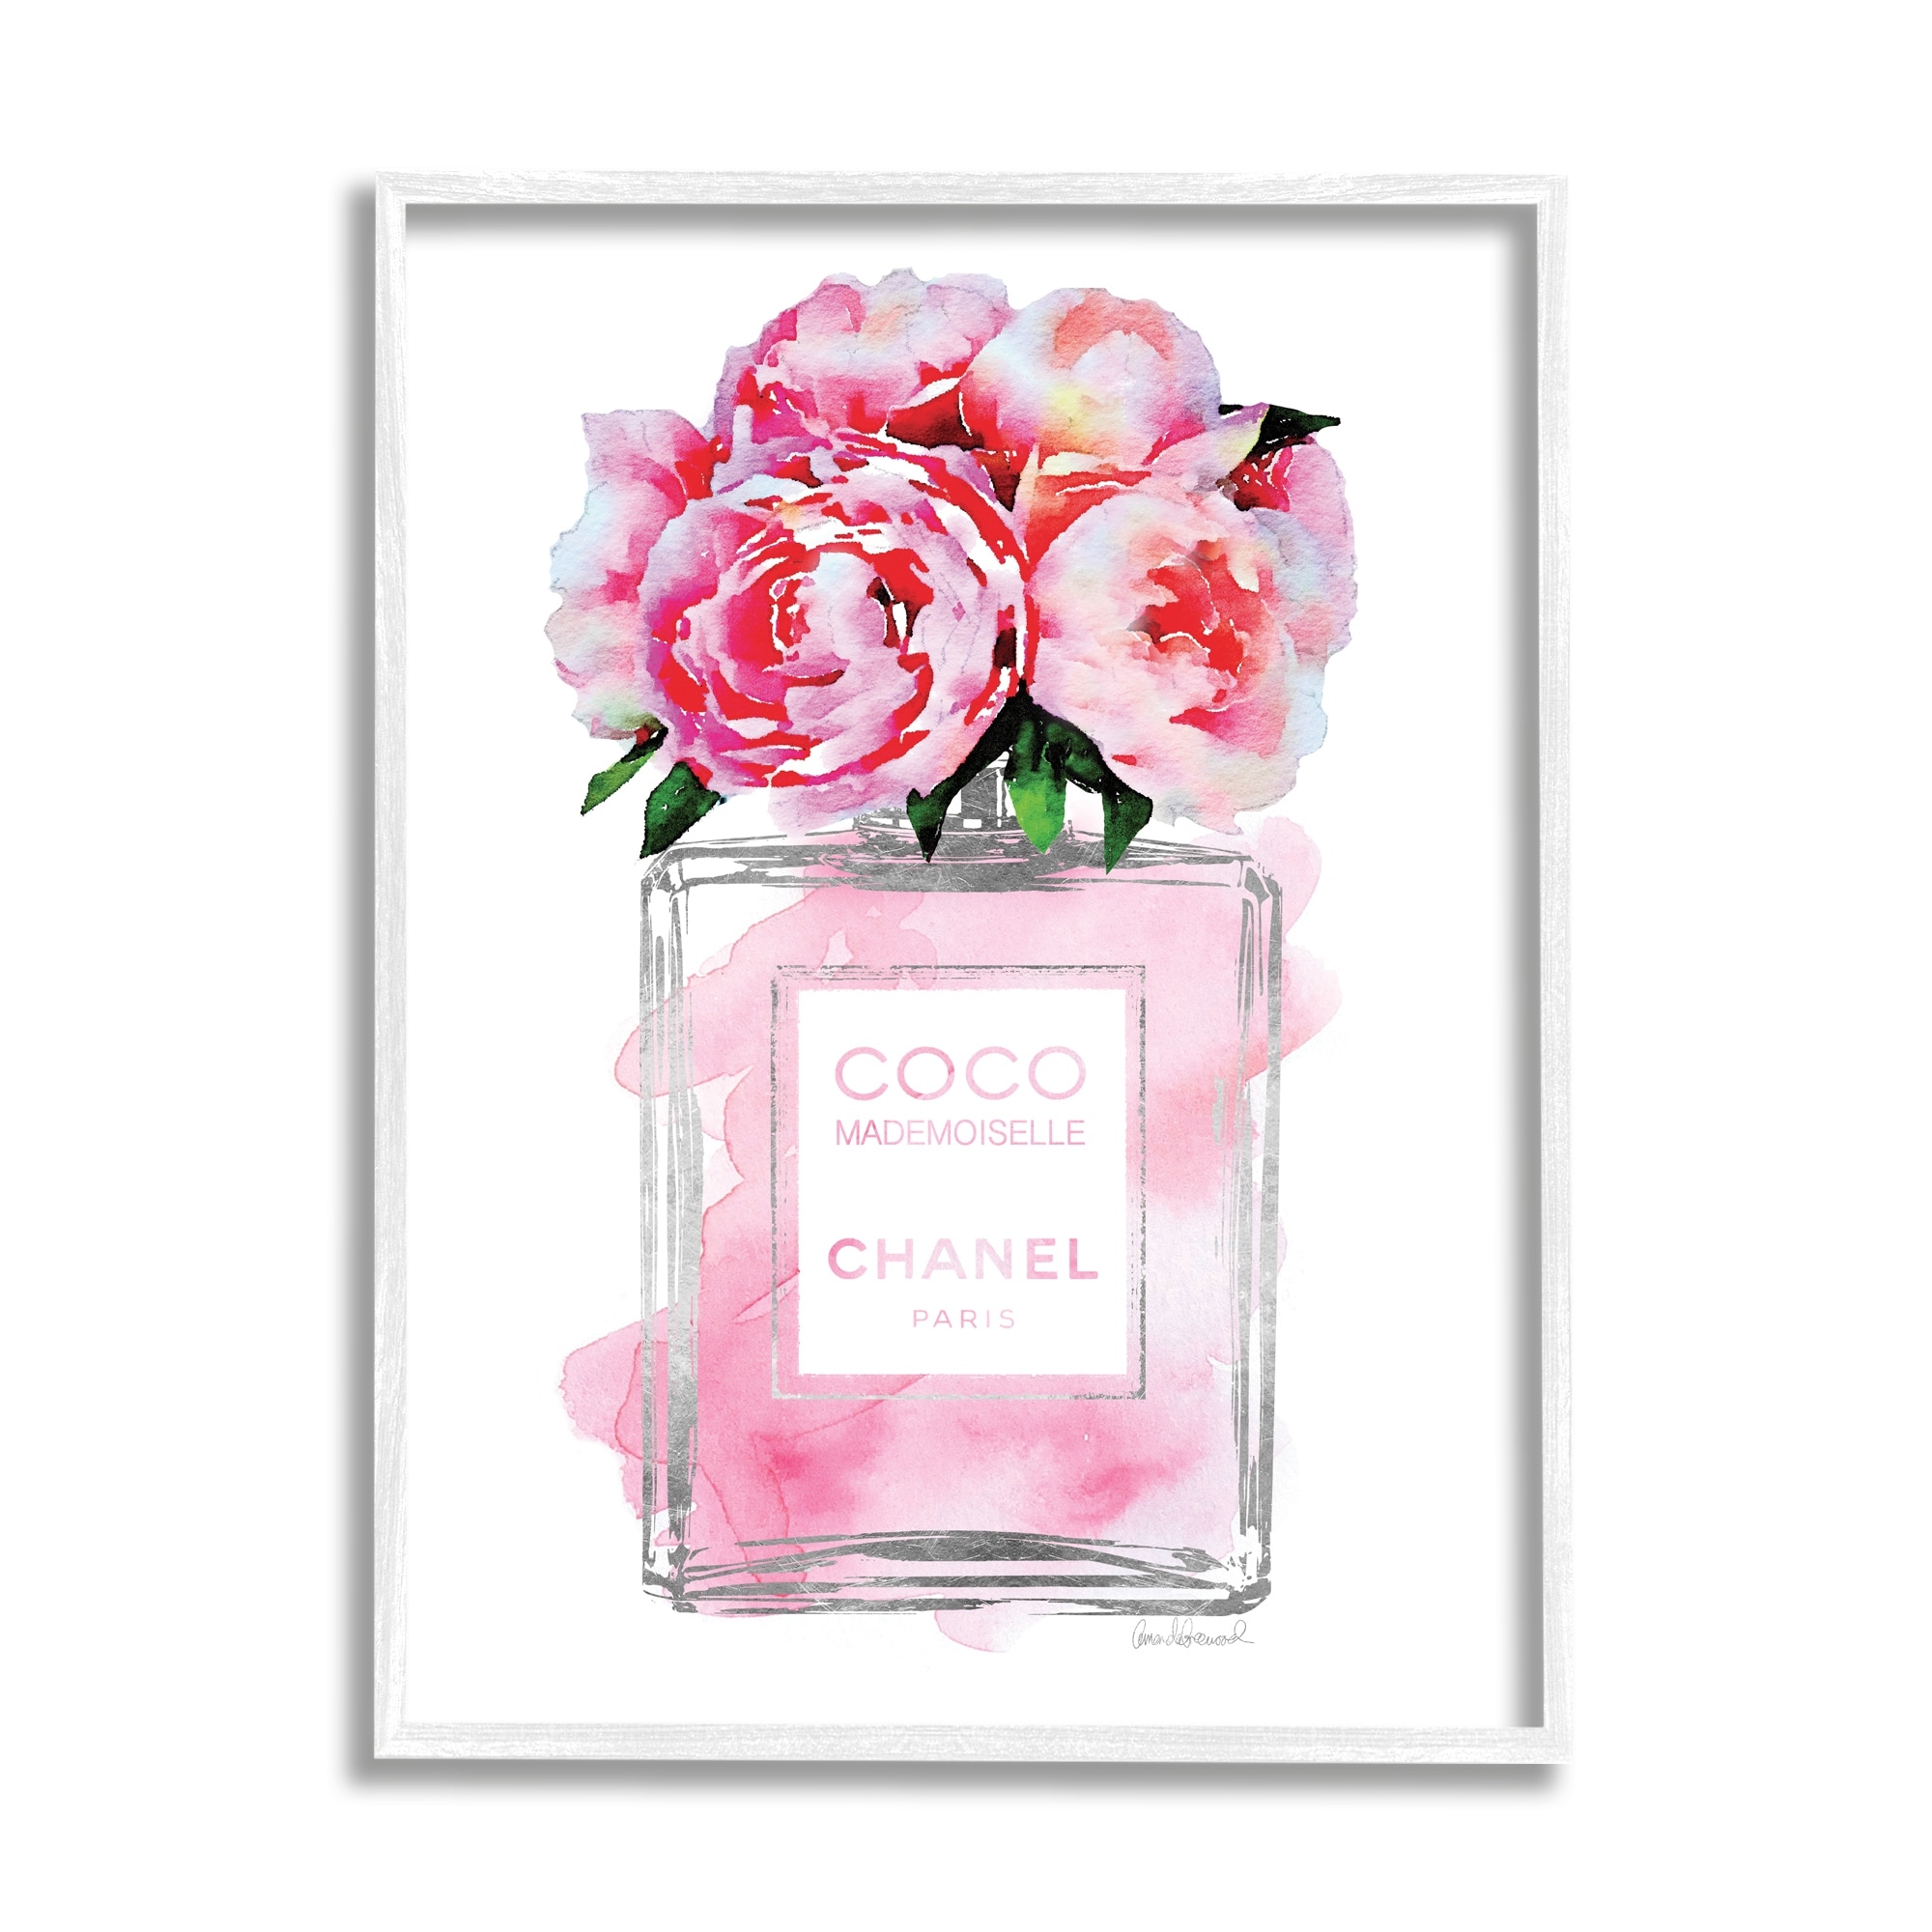 Teal Splash  Perfume bottles, Chanel canvas art, Chanel wall art